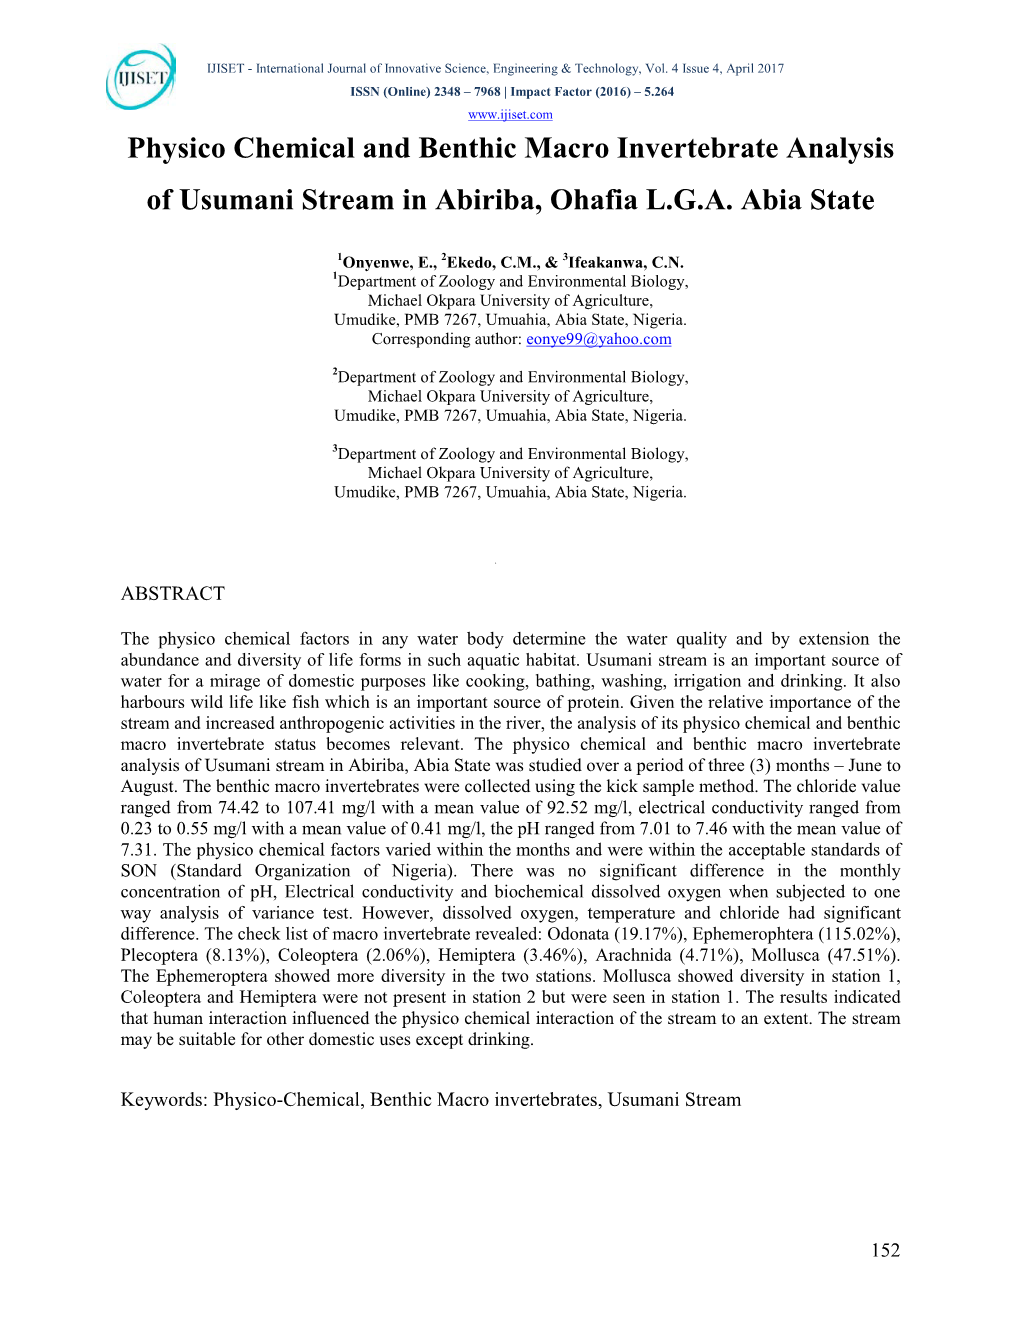 Physico Chemical and Benthic Macro Invertebrate Analysis of Usumani Stream in Abiriba, Ohafia L.G.A. Abia State